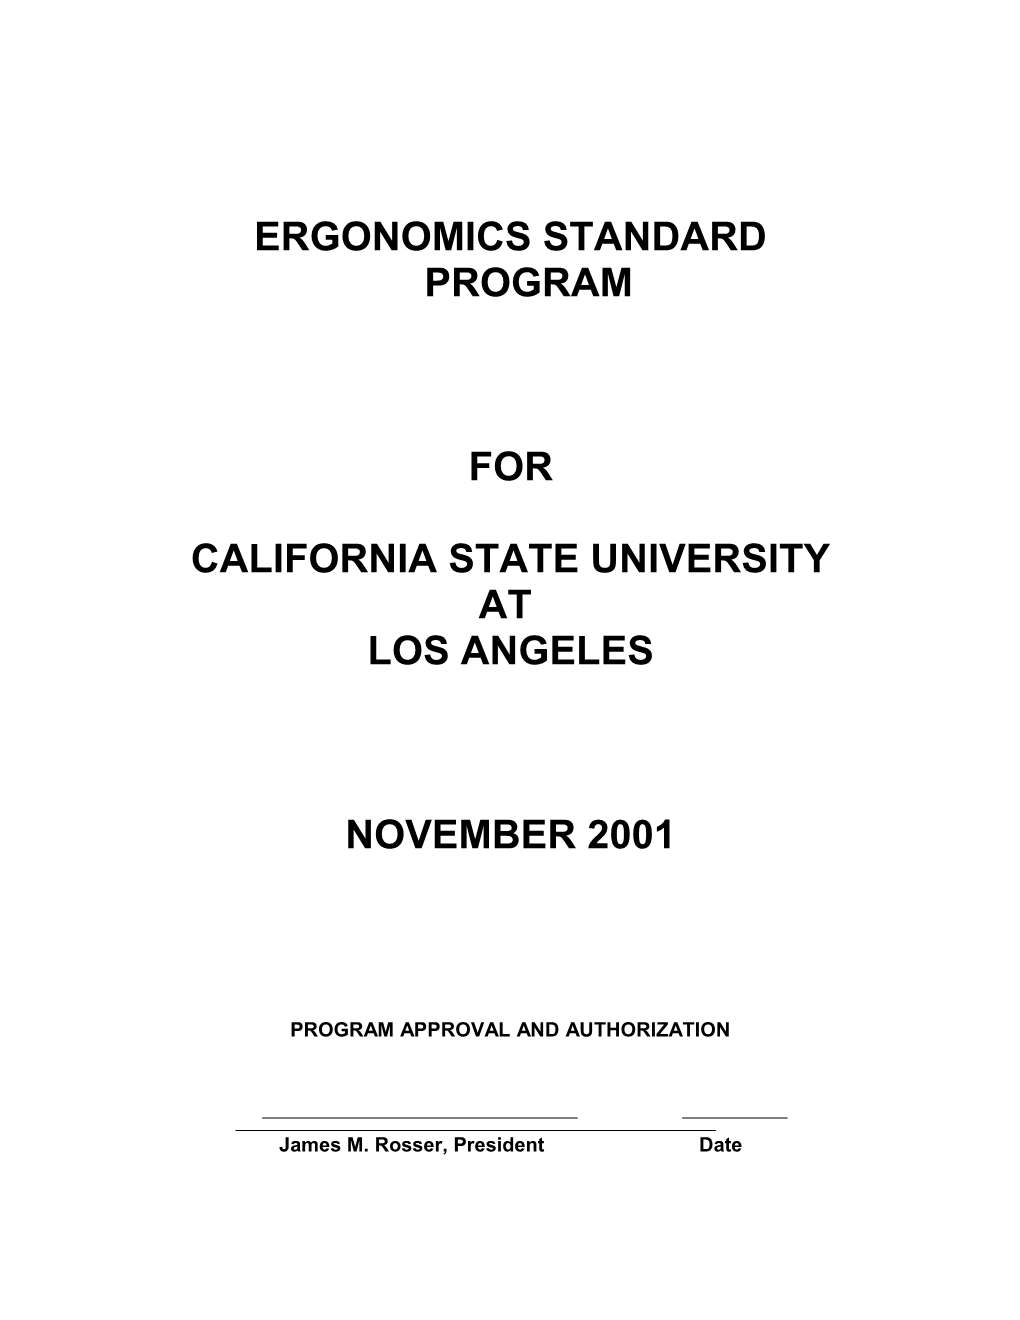 Subject: Ergonomics Program Standard